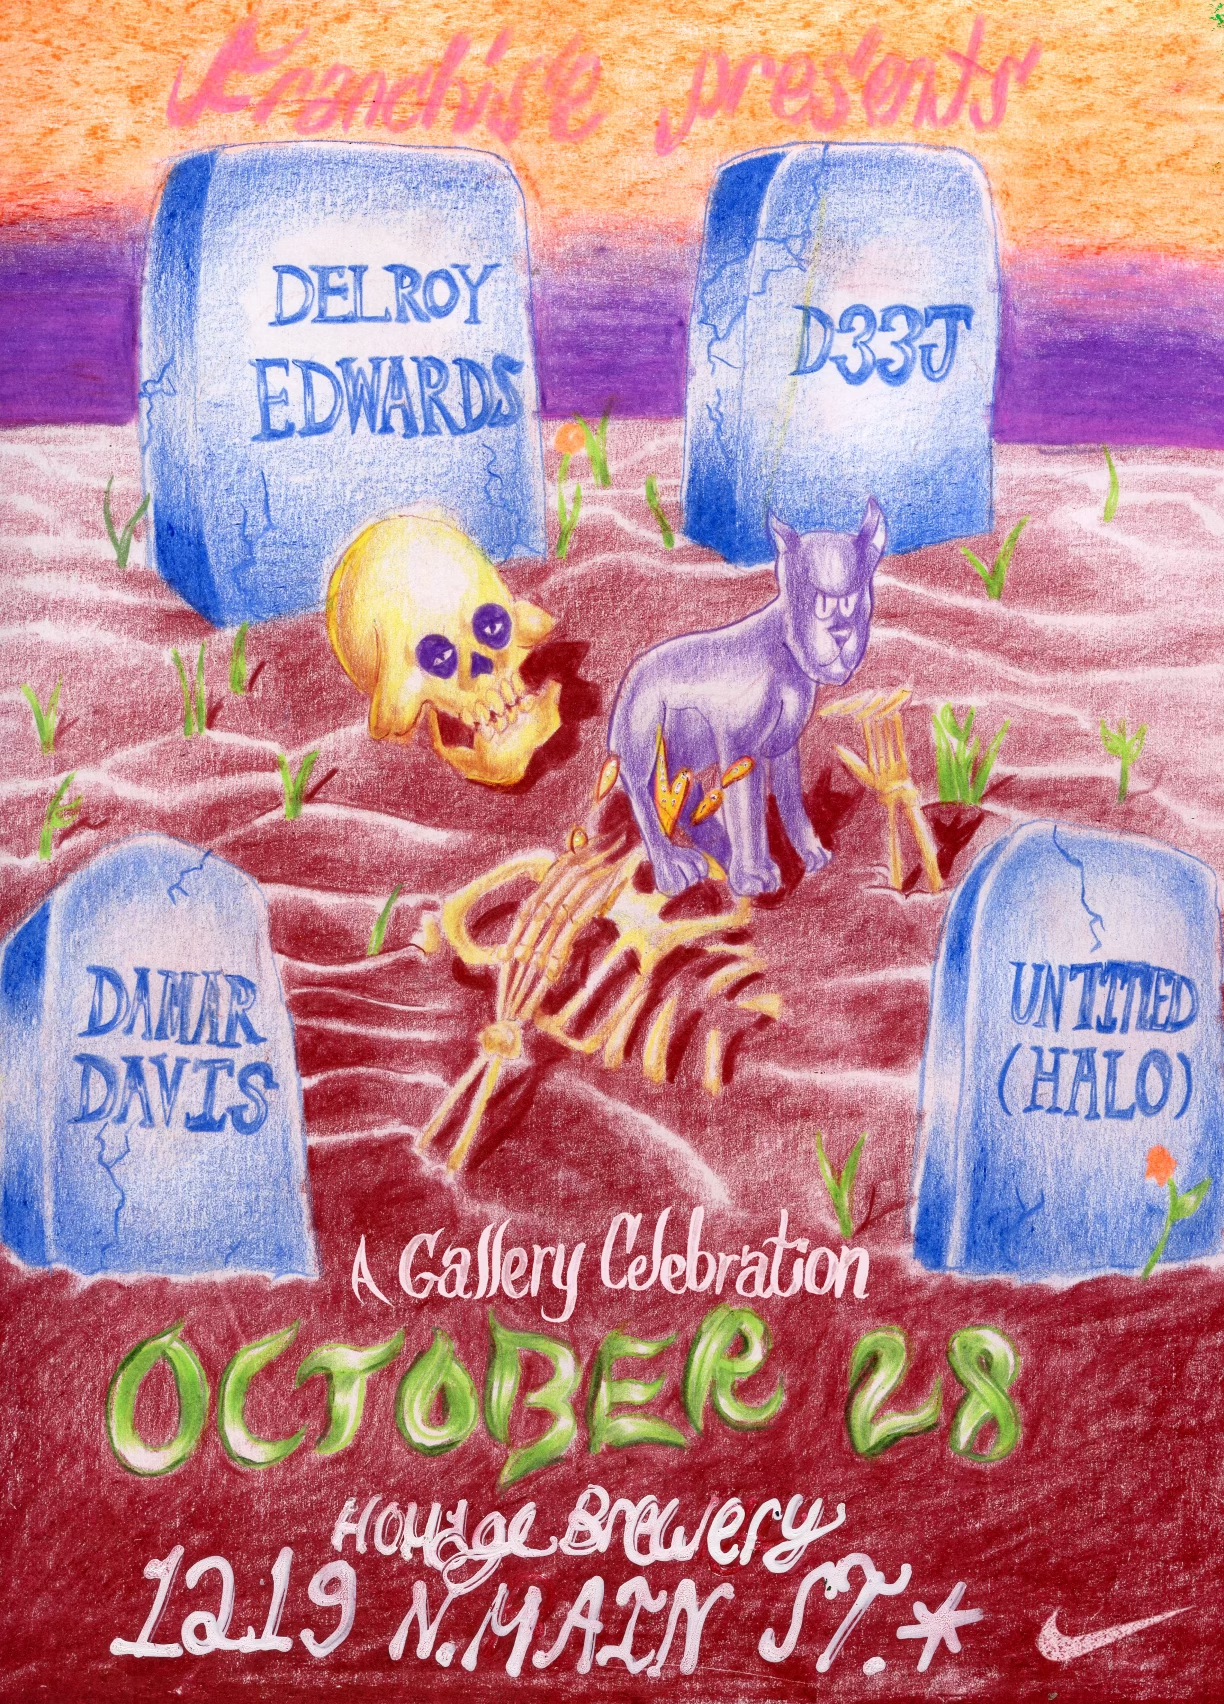 Franchise presents Halloween w/ Delroy Edwards, D33J, Damar Davis, Untitled (halo) - フライヤー表